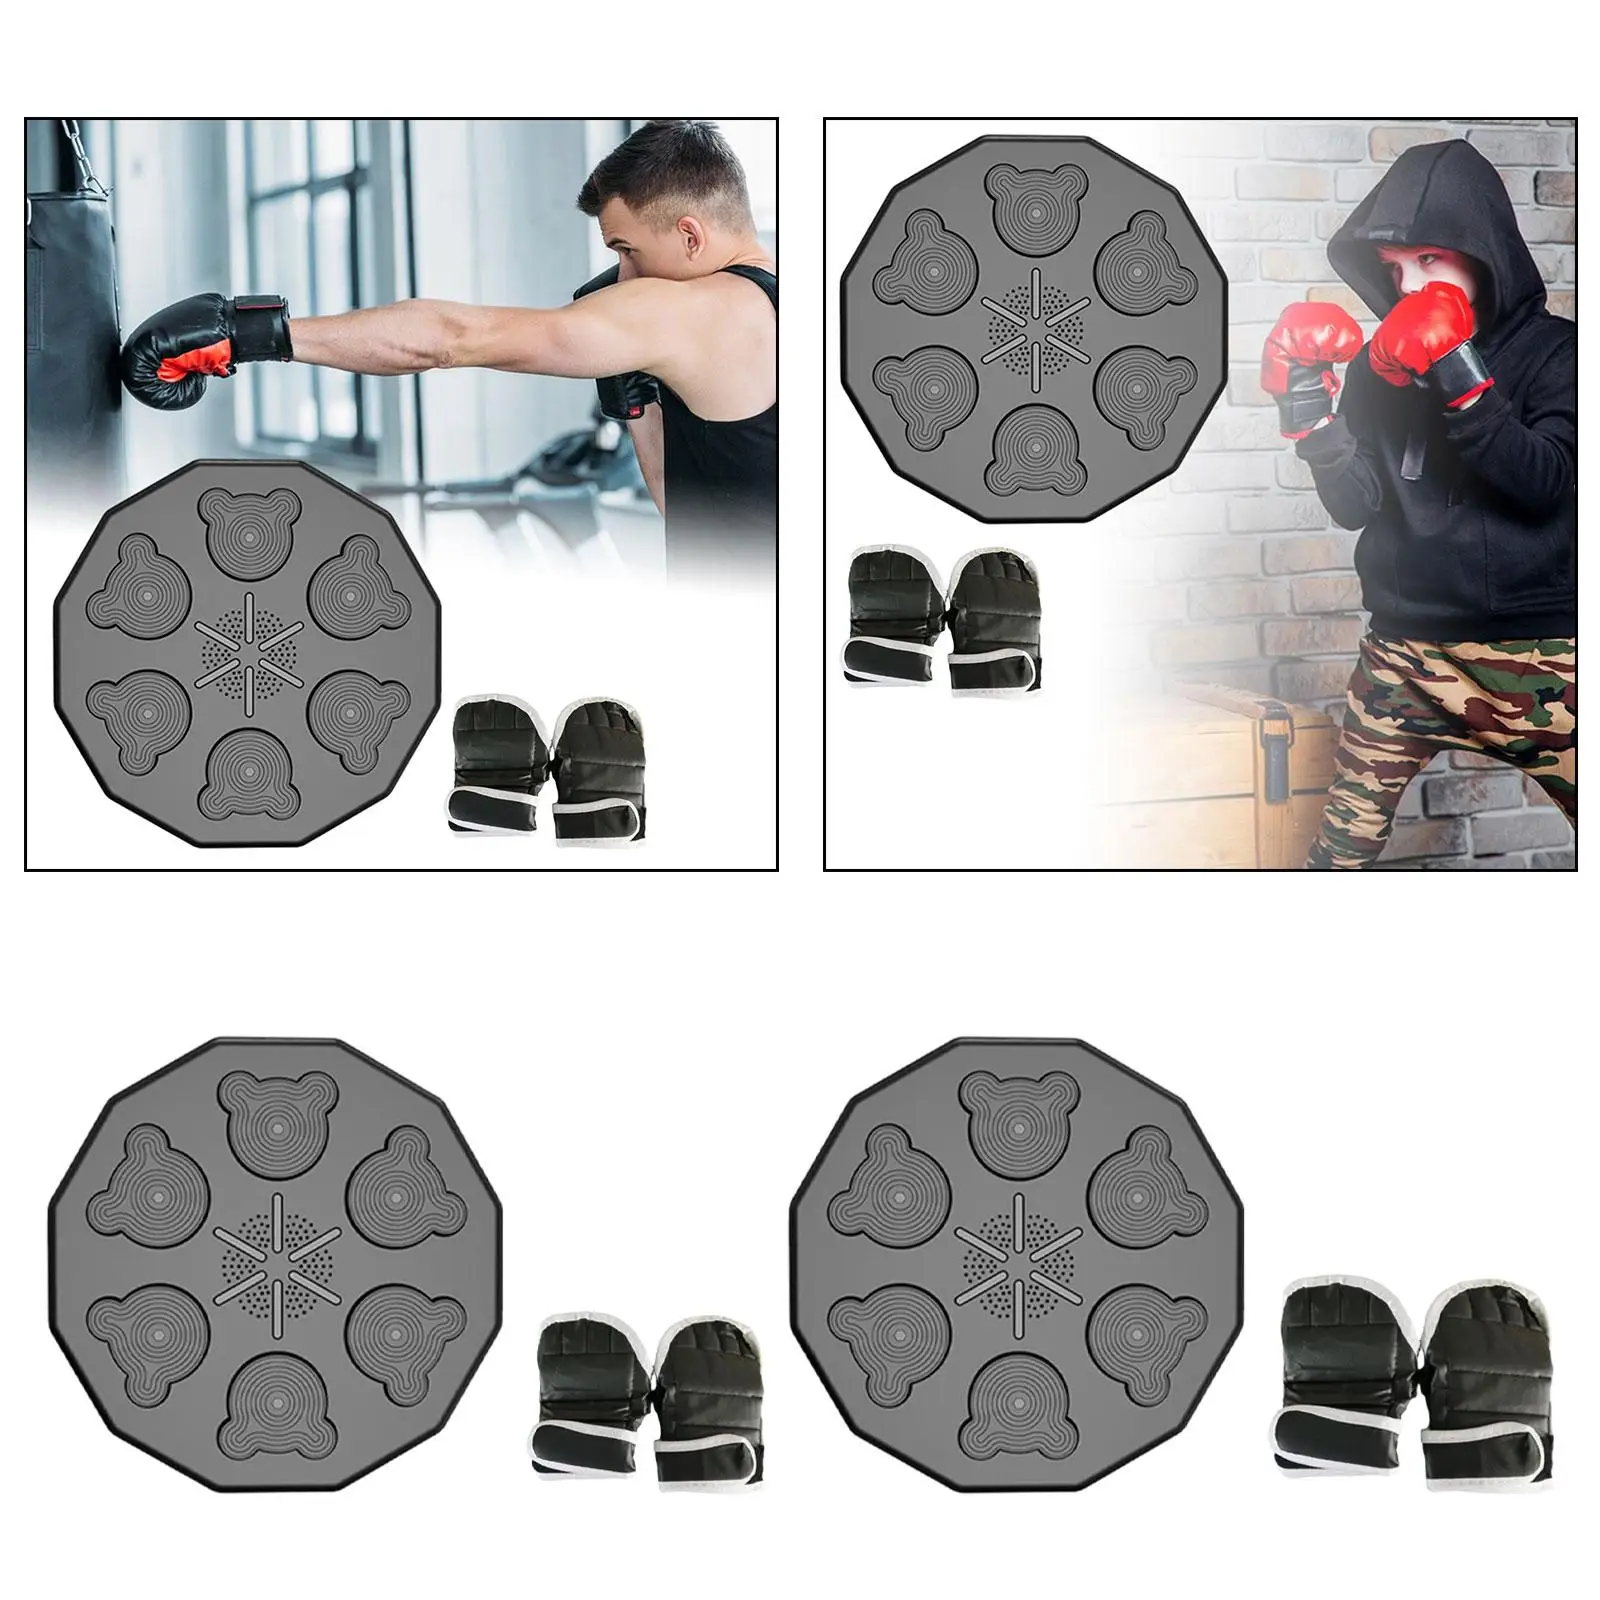 Music Boxing Training Machine Sandbag Boxing Equipment Household Wall Target